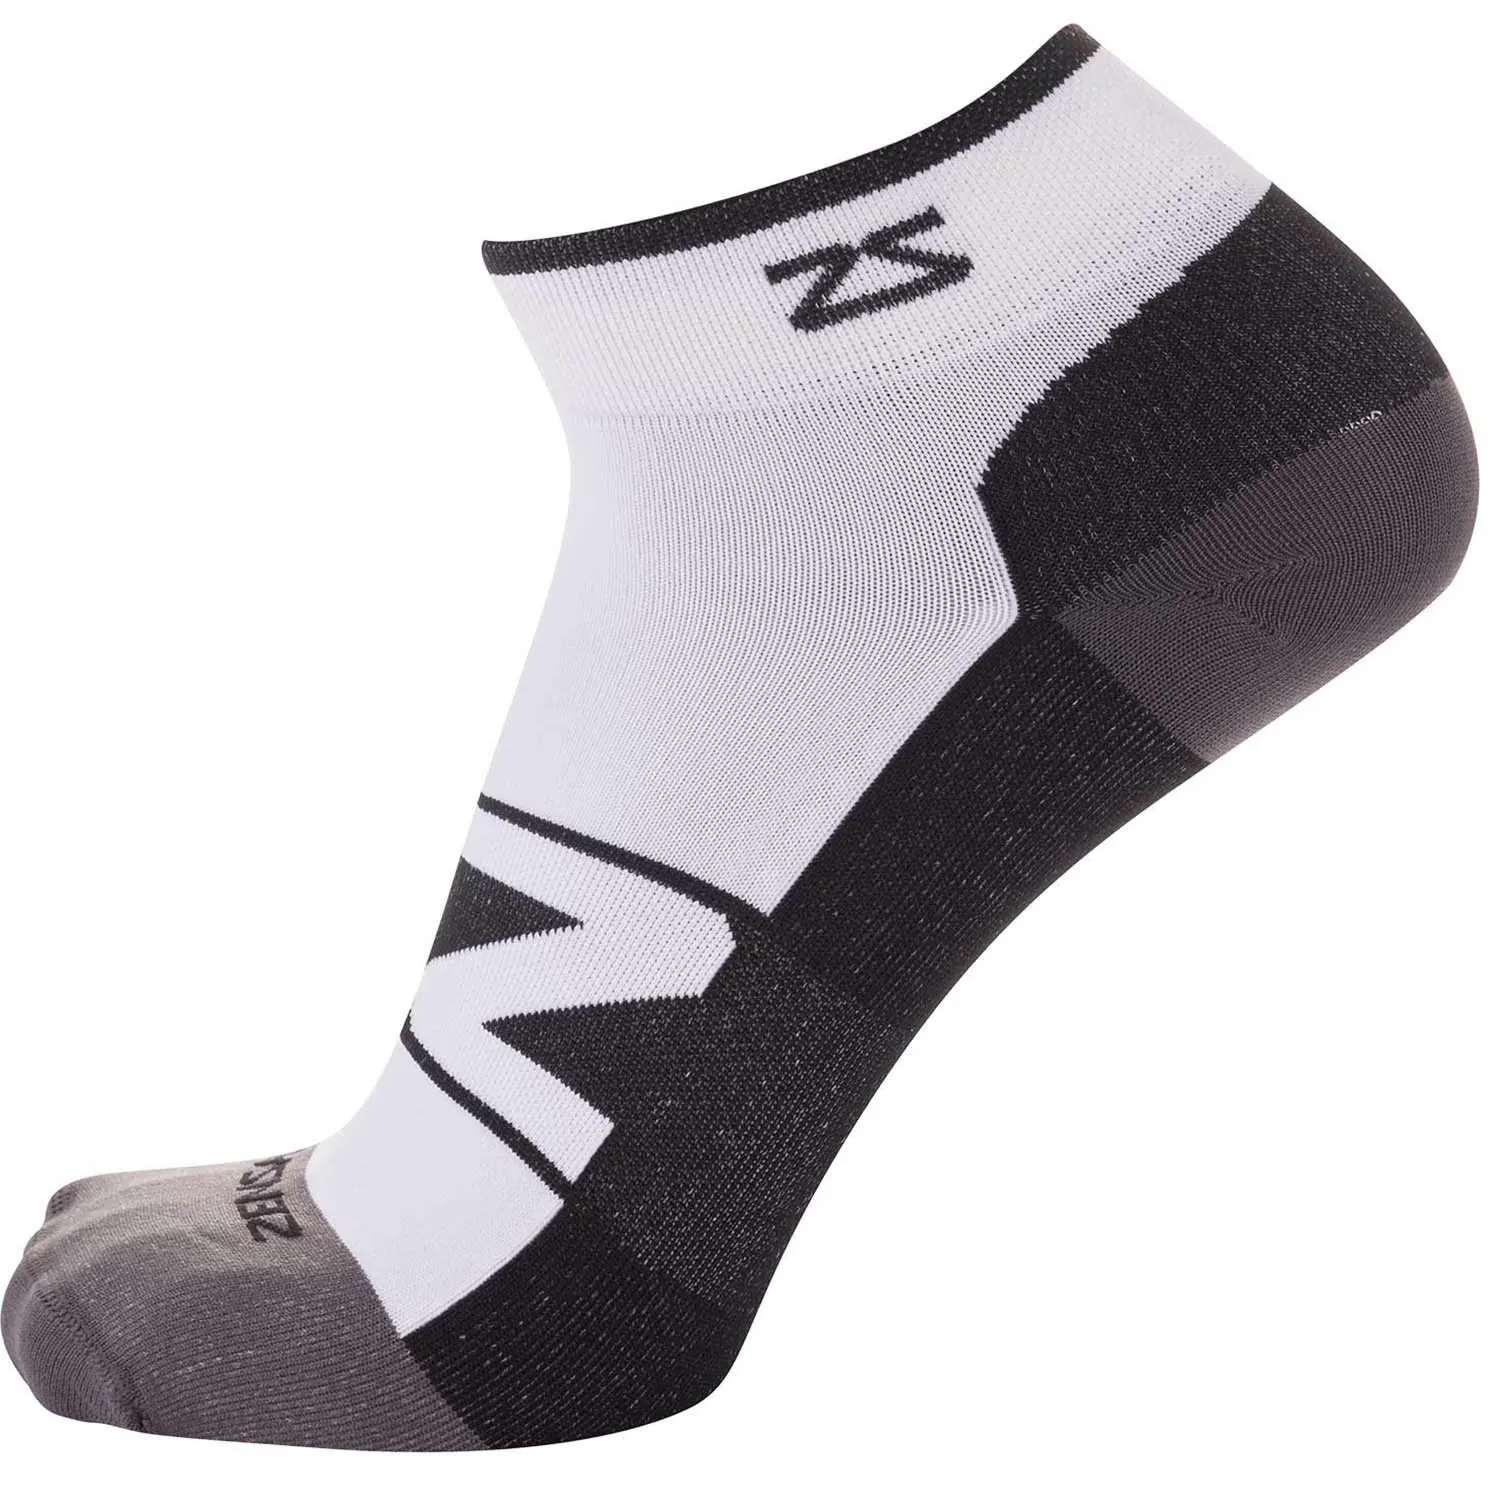 Buy Zensah Peek Ultra-Thin Lightweight Running Socks for Men and Women ...